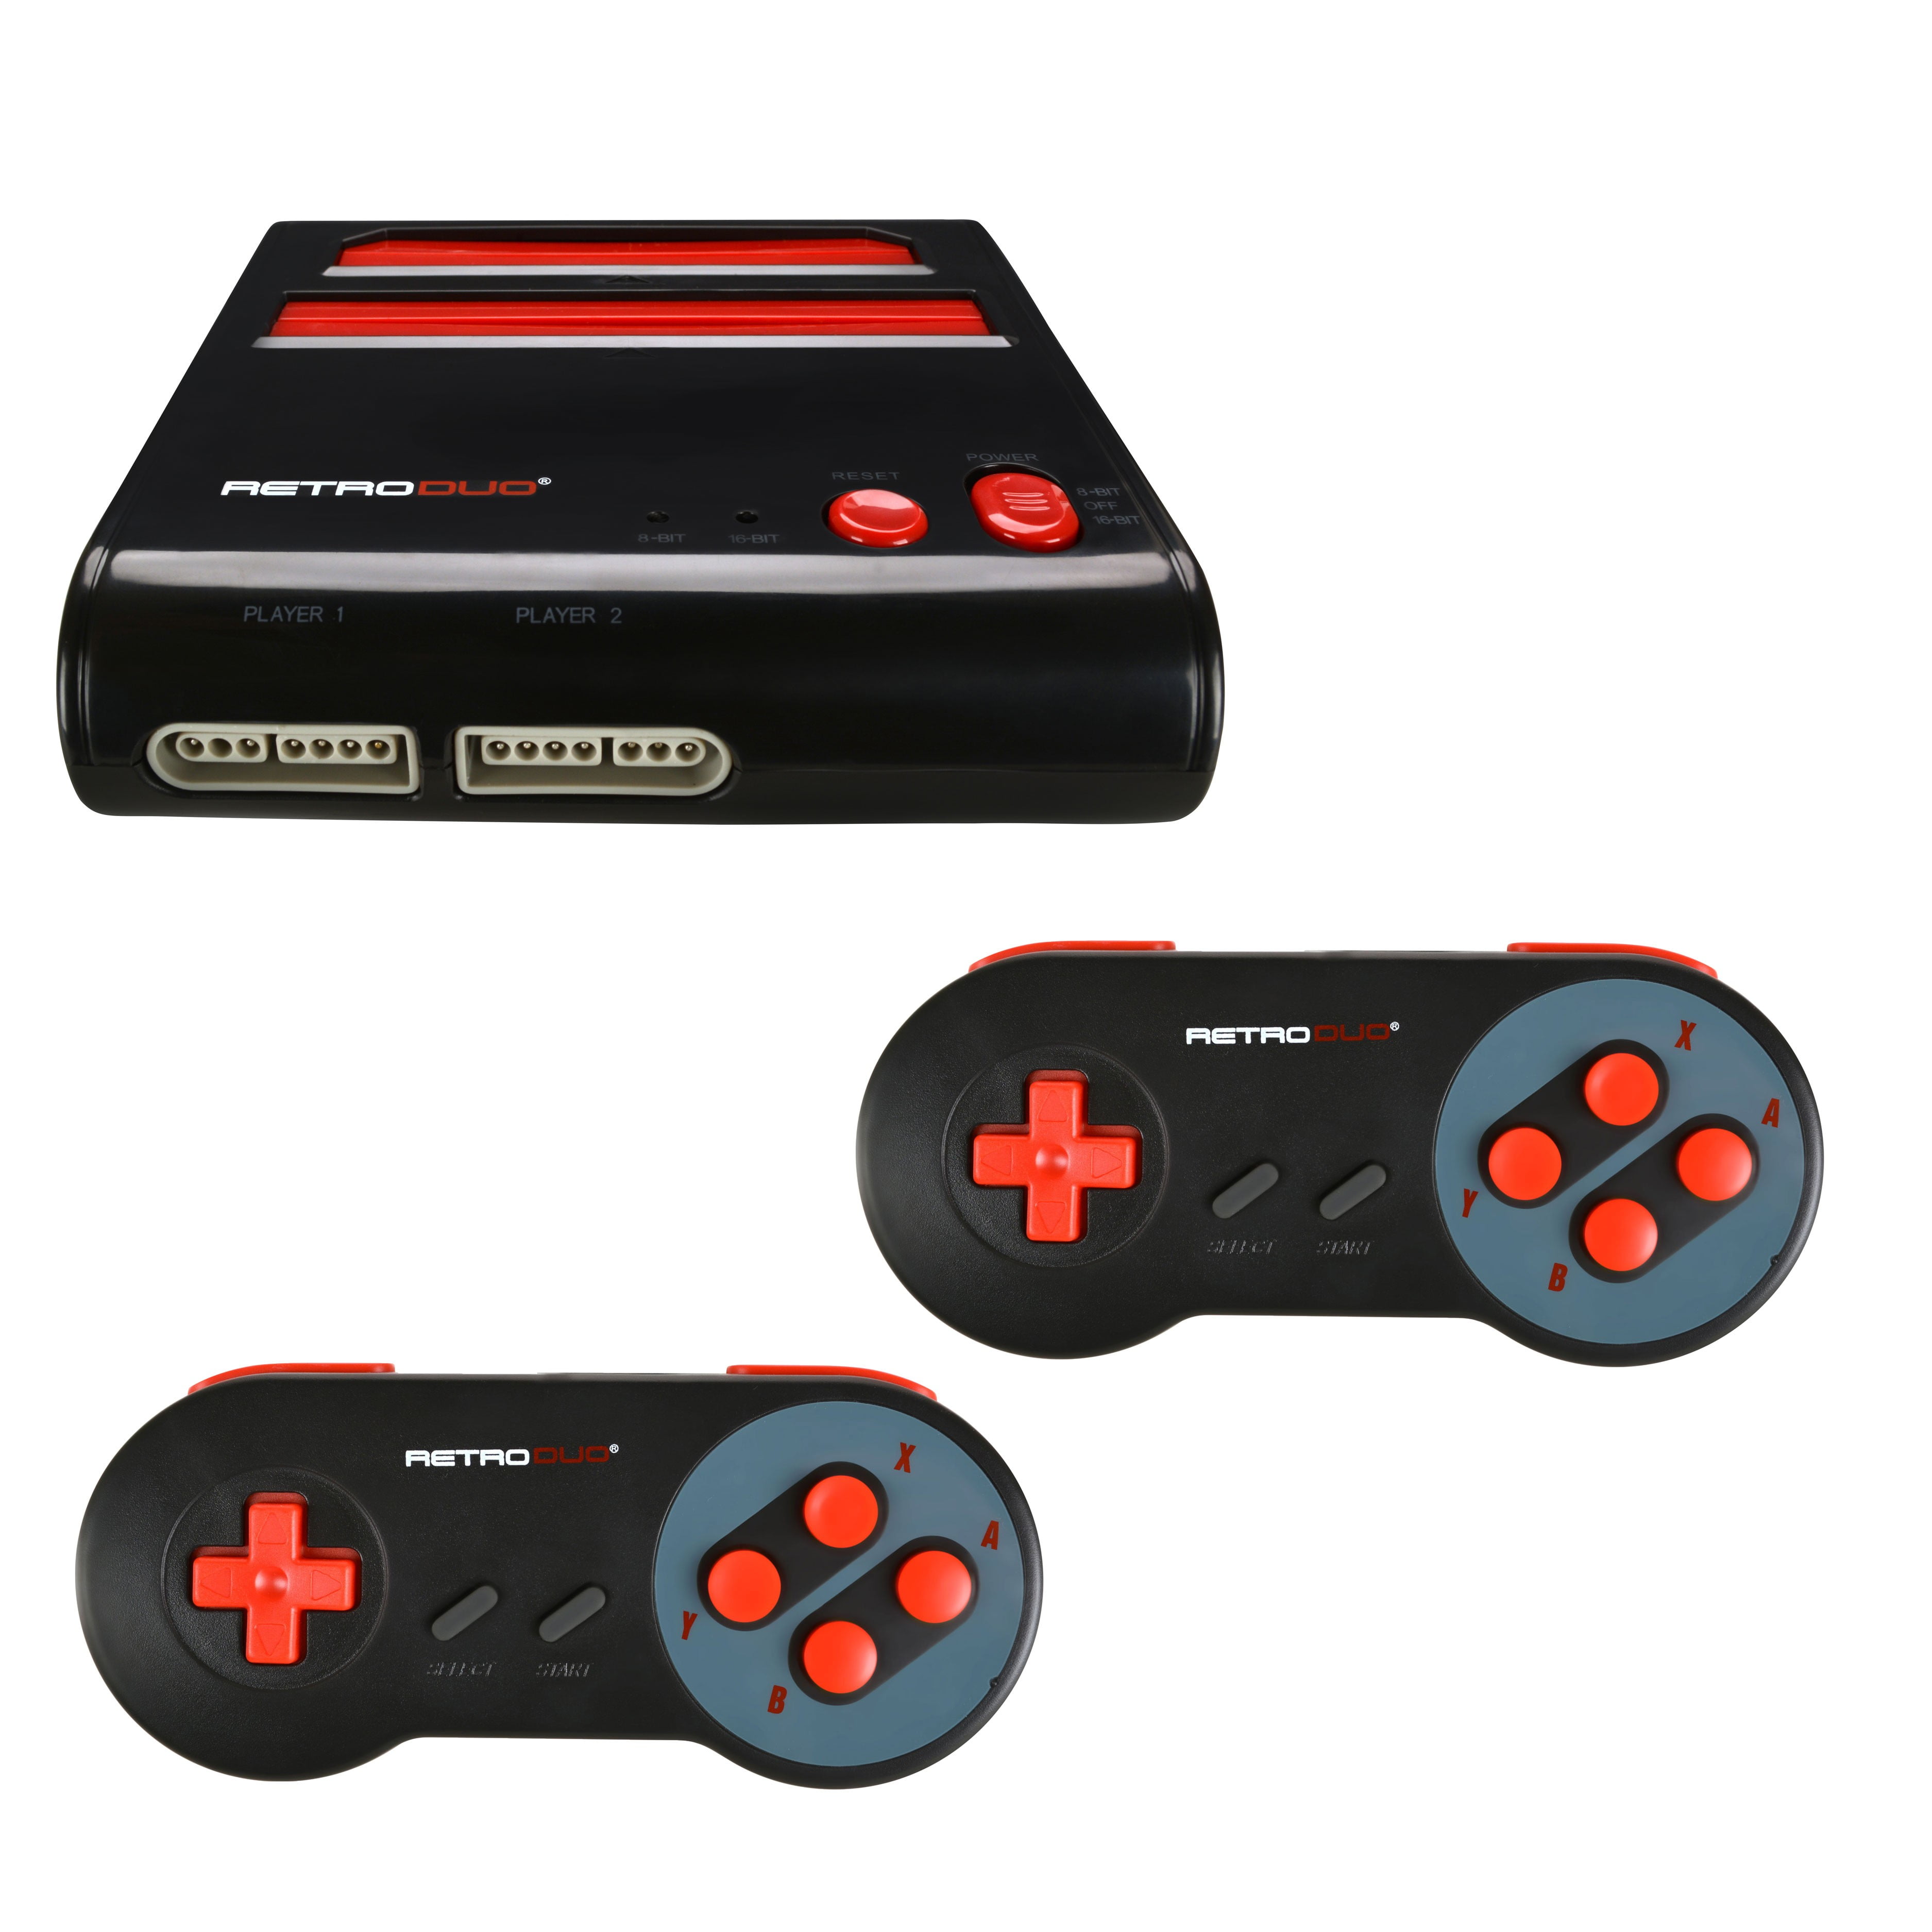 Udflugt liner Reparation mulig Retro-Bit Retro Duo Twin Video Game System NES and SNES V3.0 - Black/Red -  Walmart.com